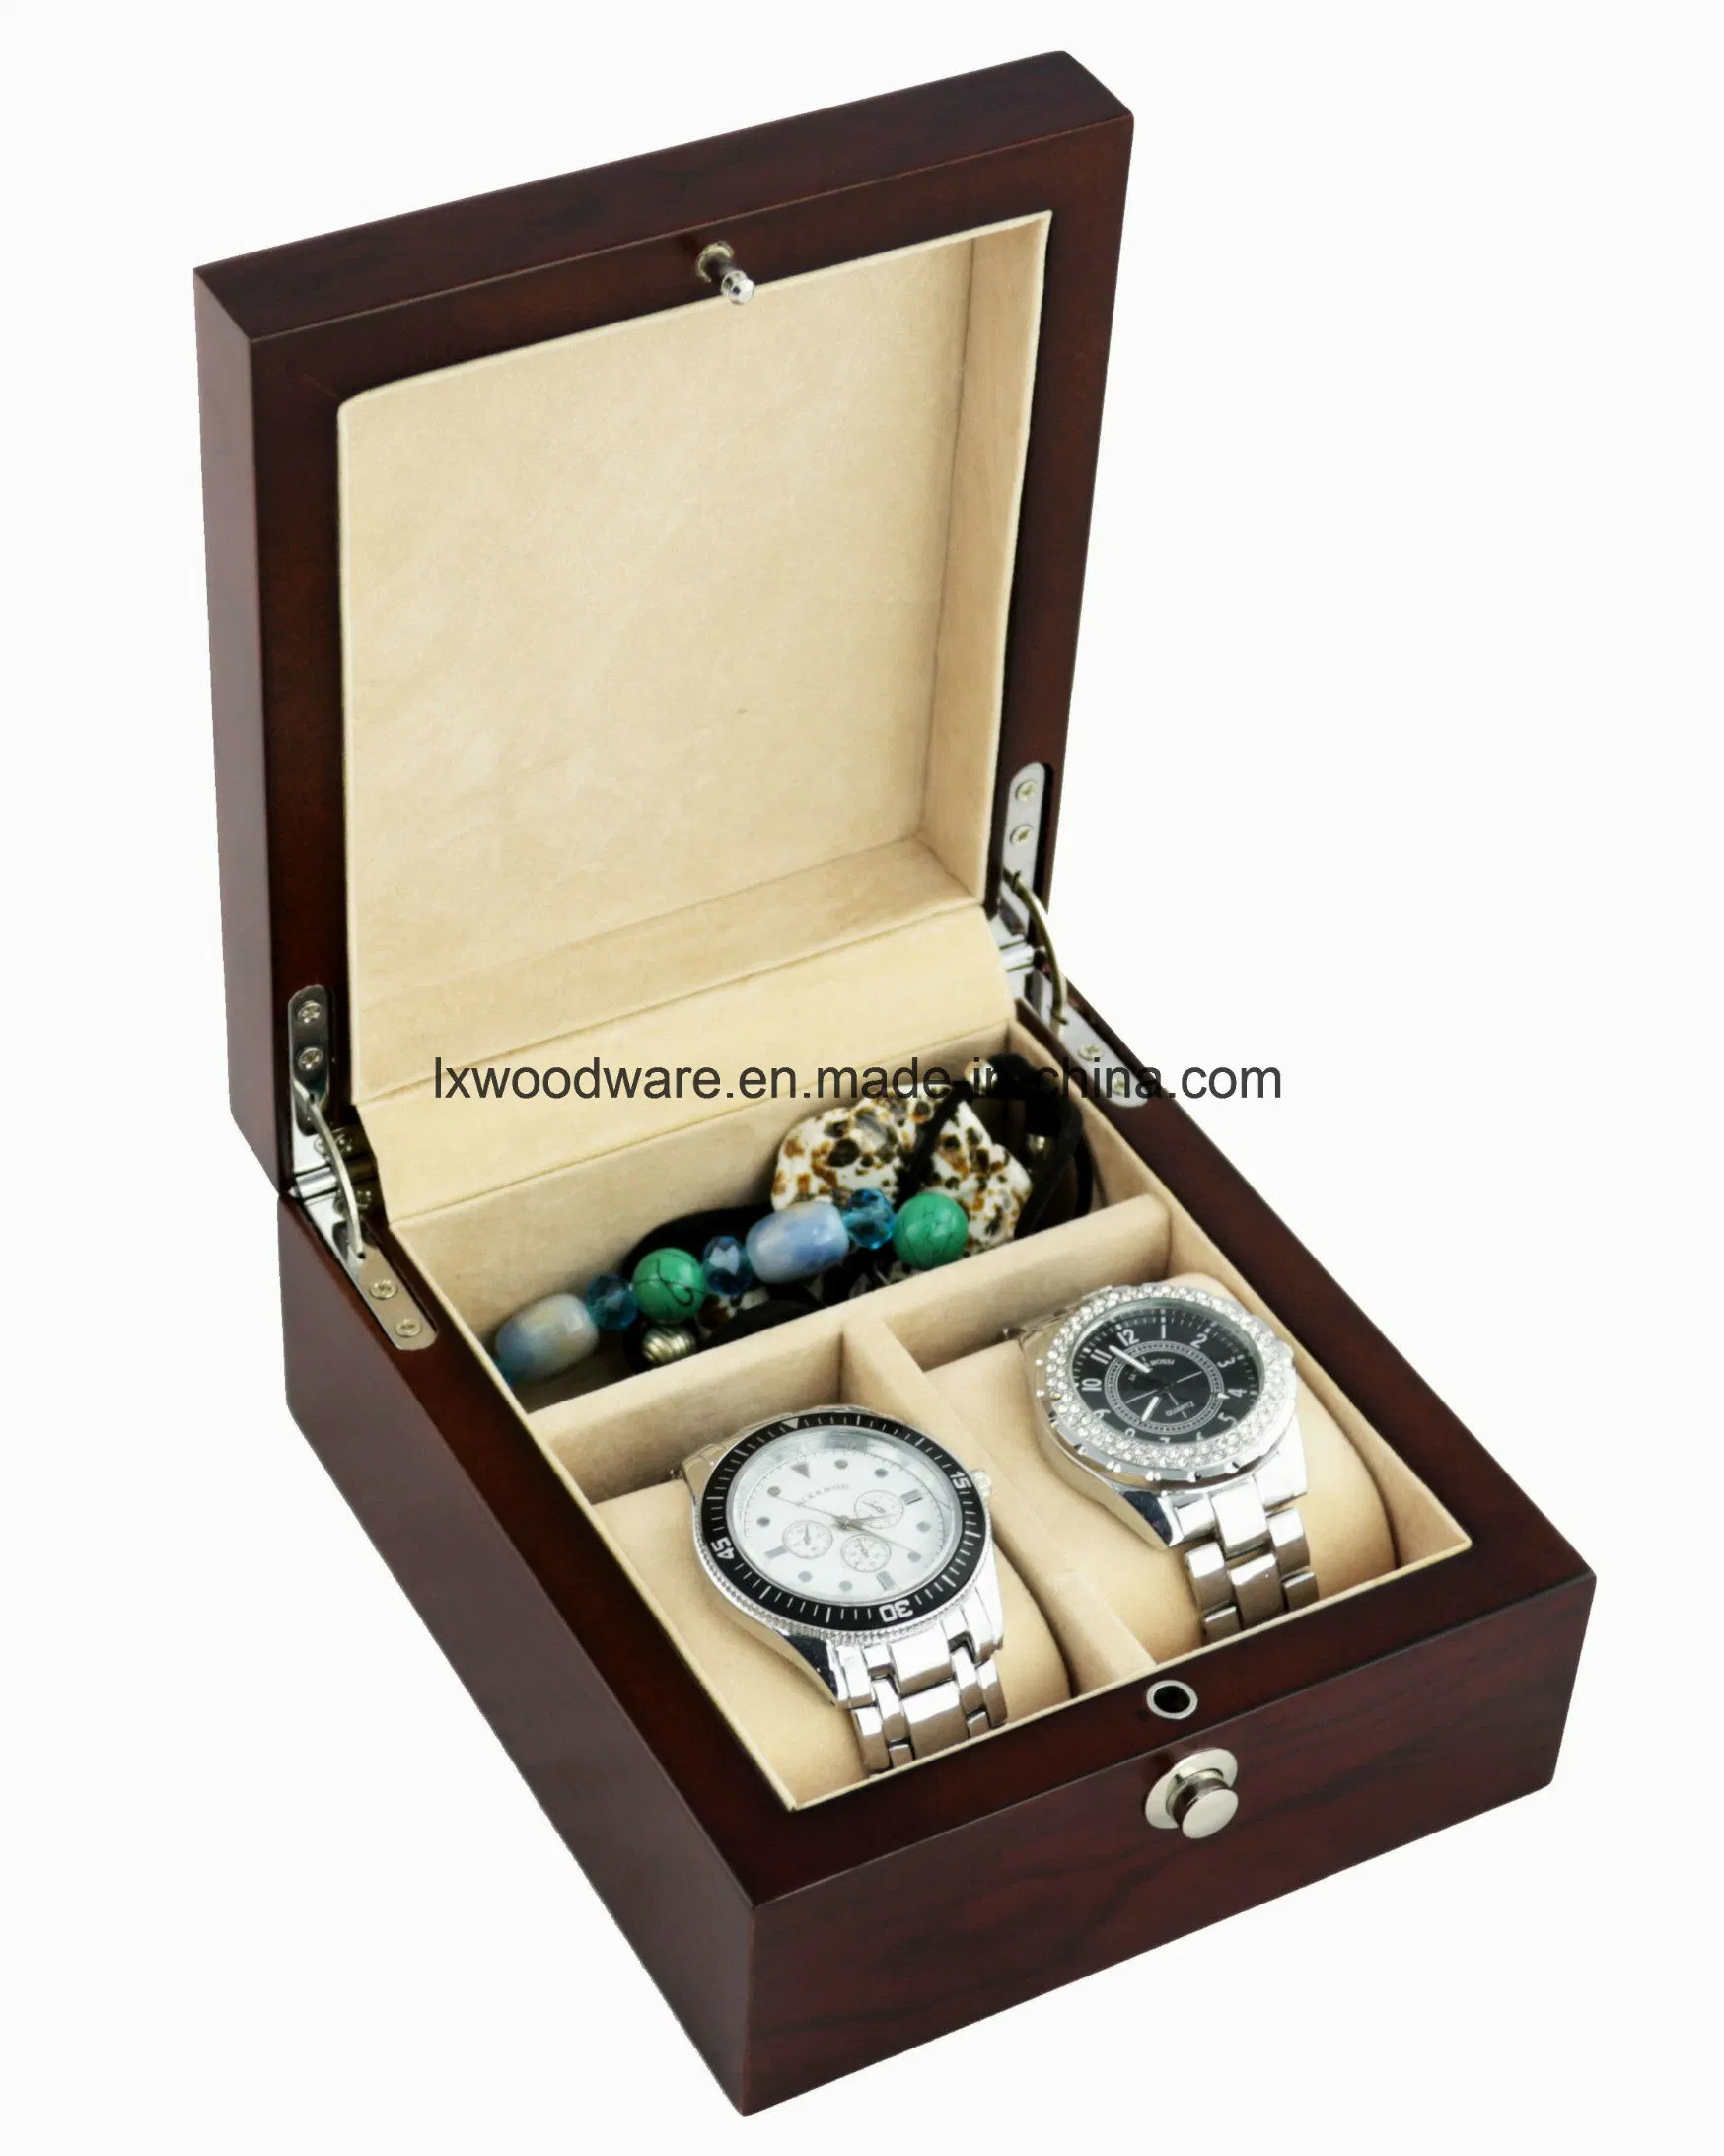 Rosewood High Gloss Finish Wooden Watch Box